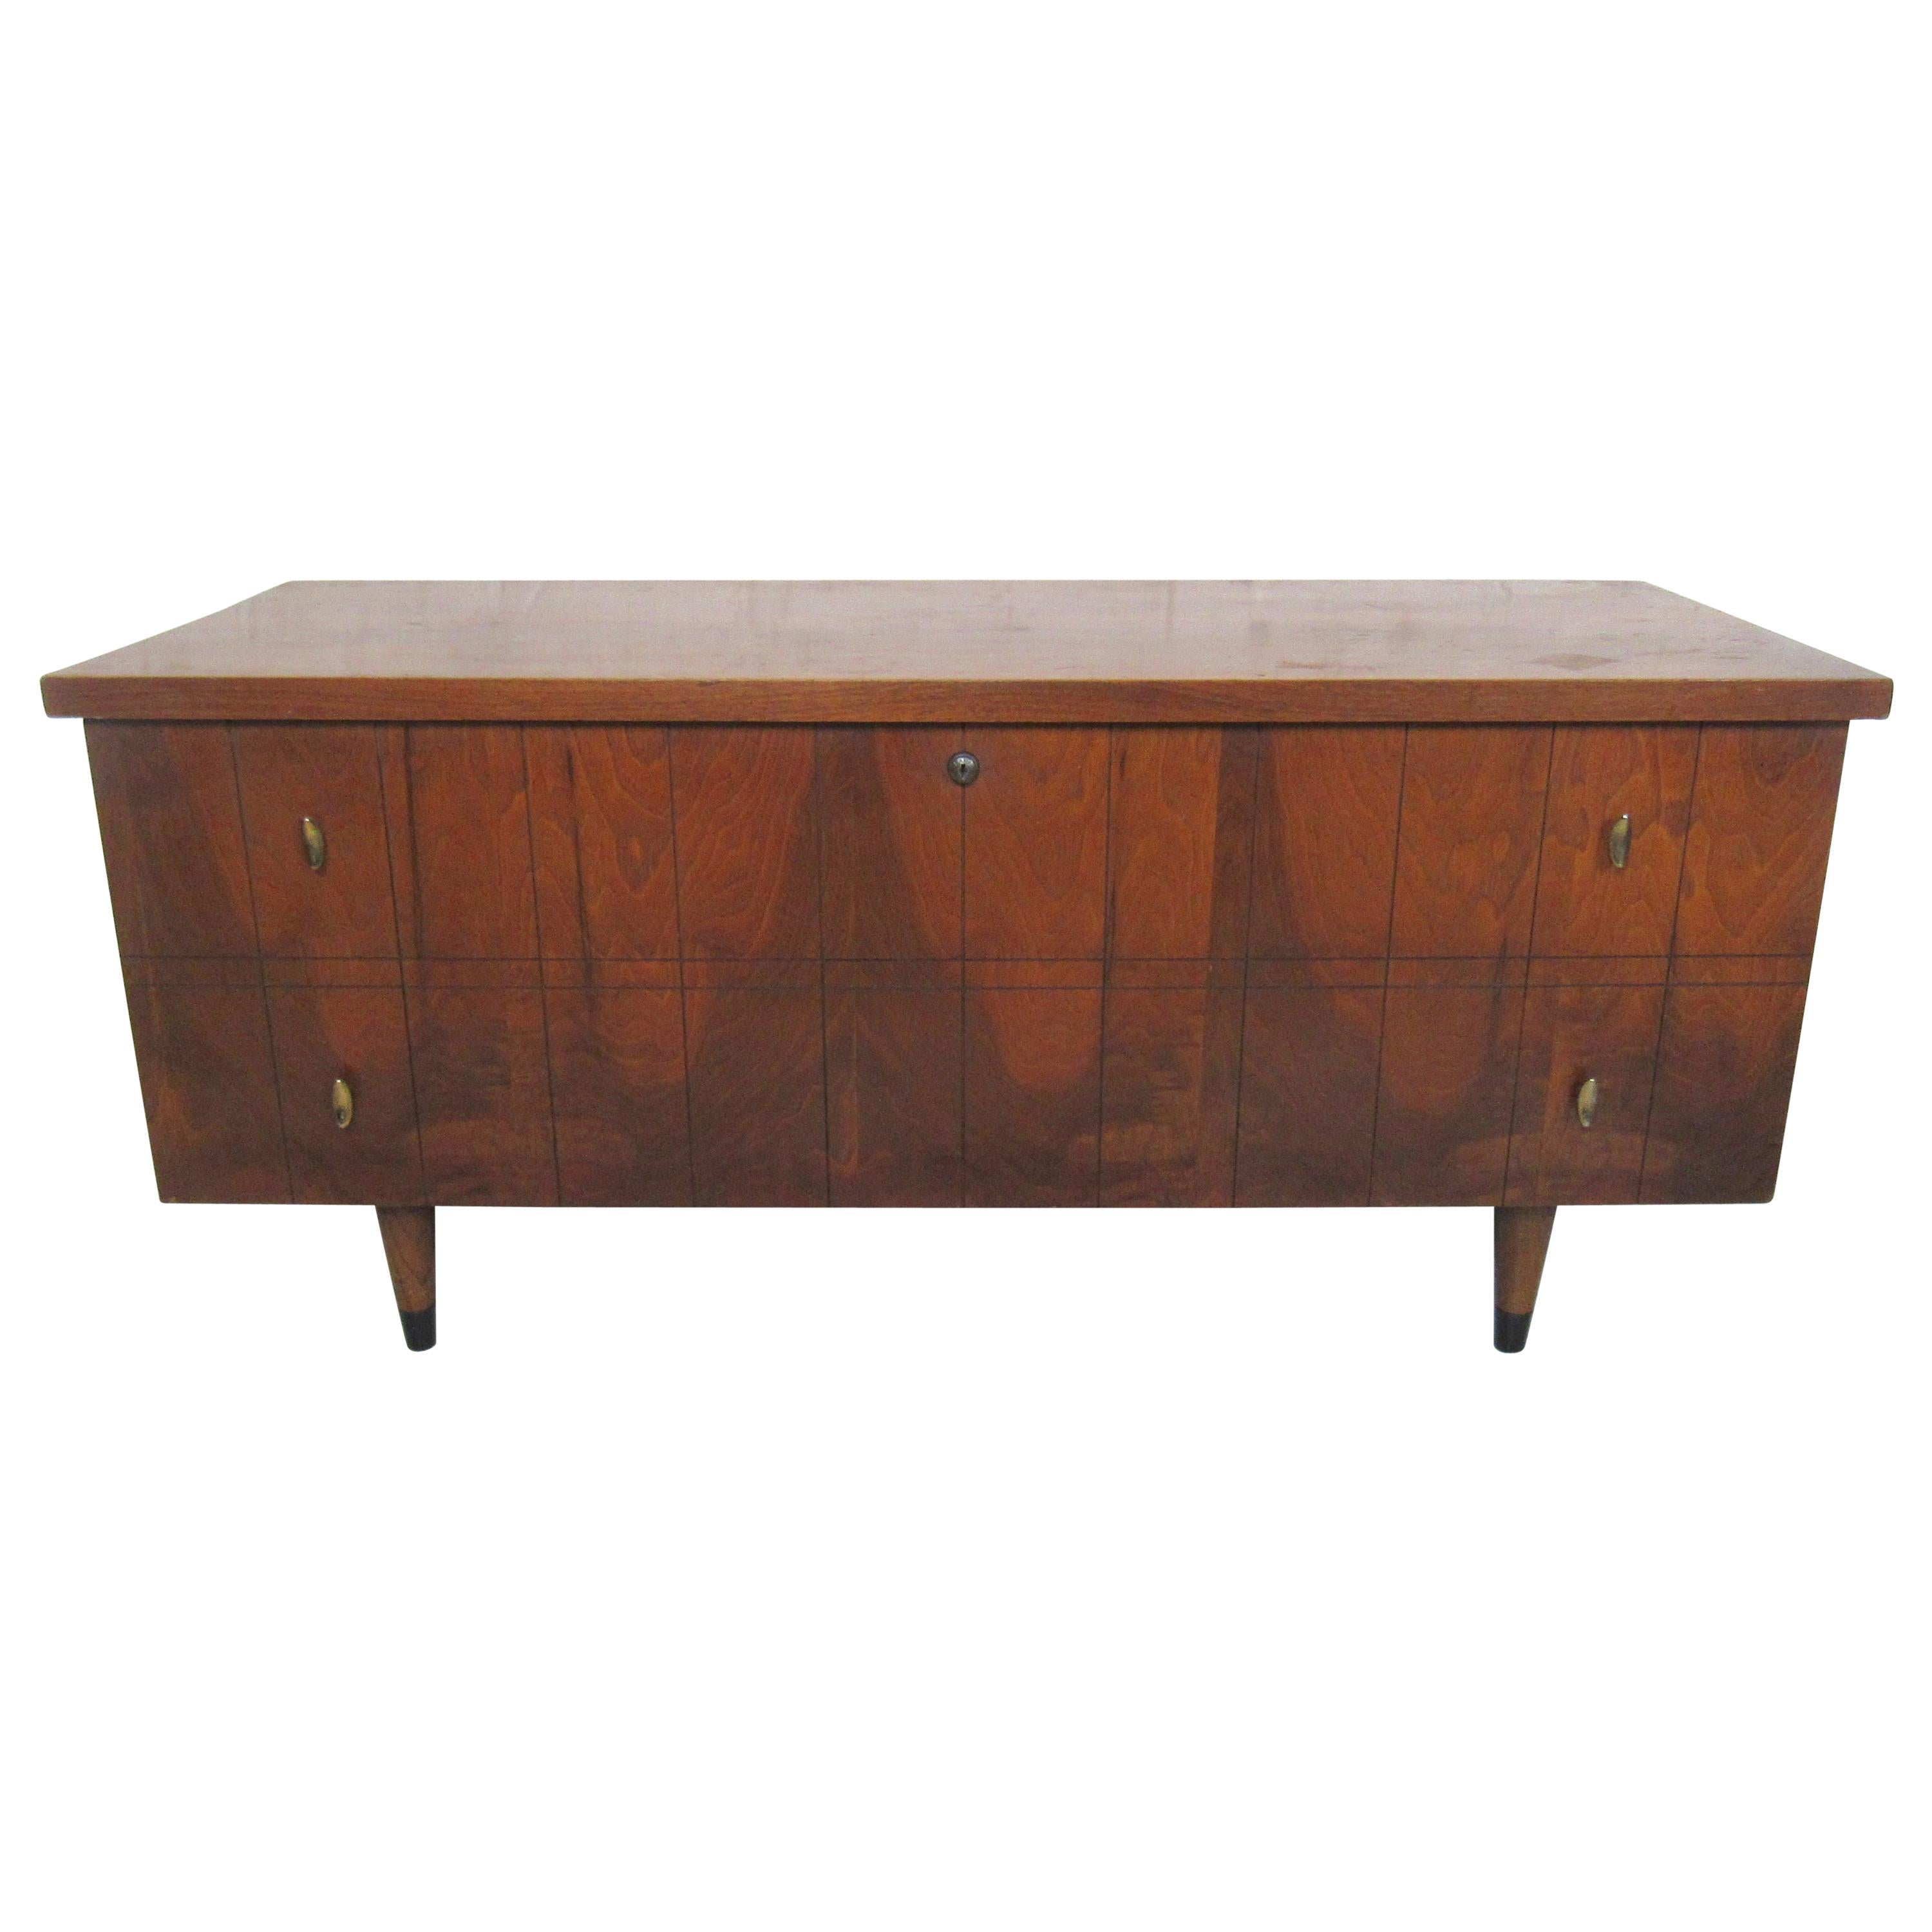 Does Lane Furniture make cedar chests?